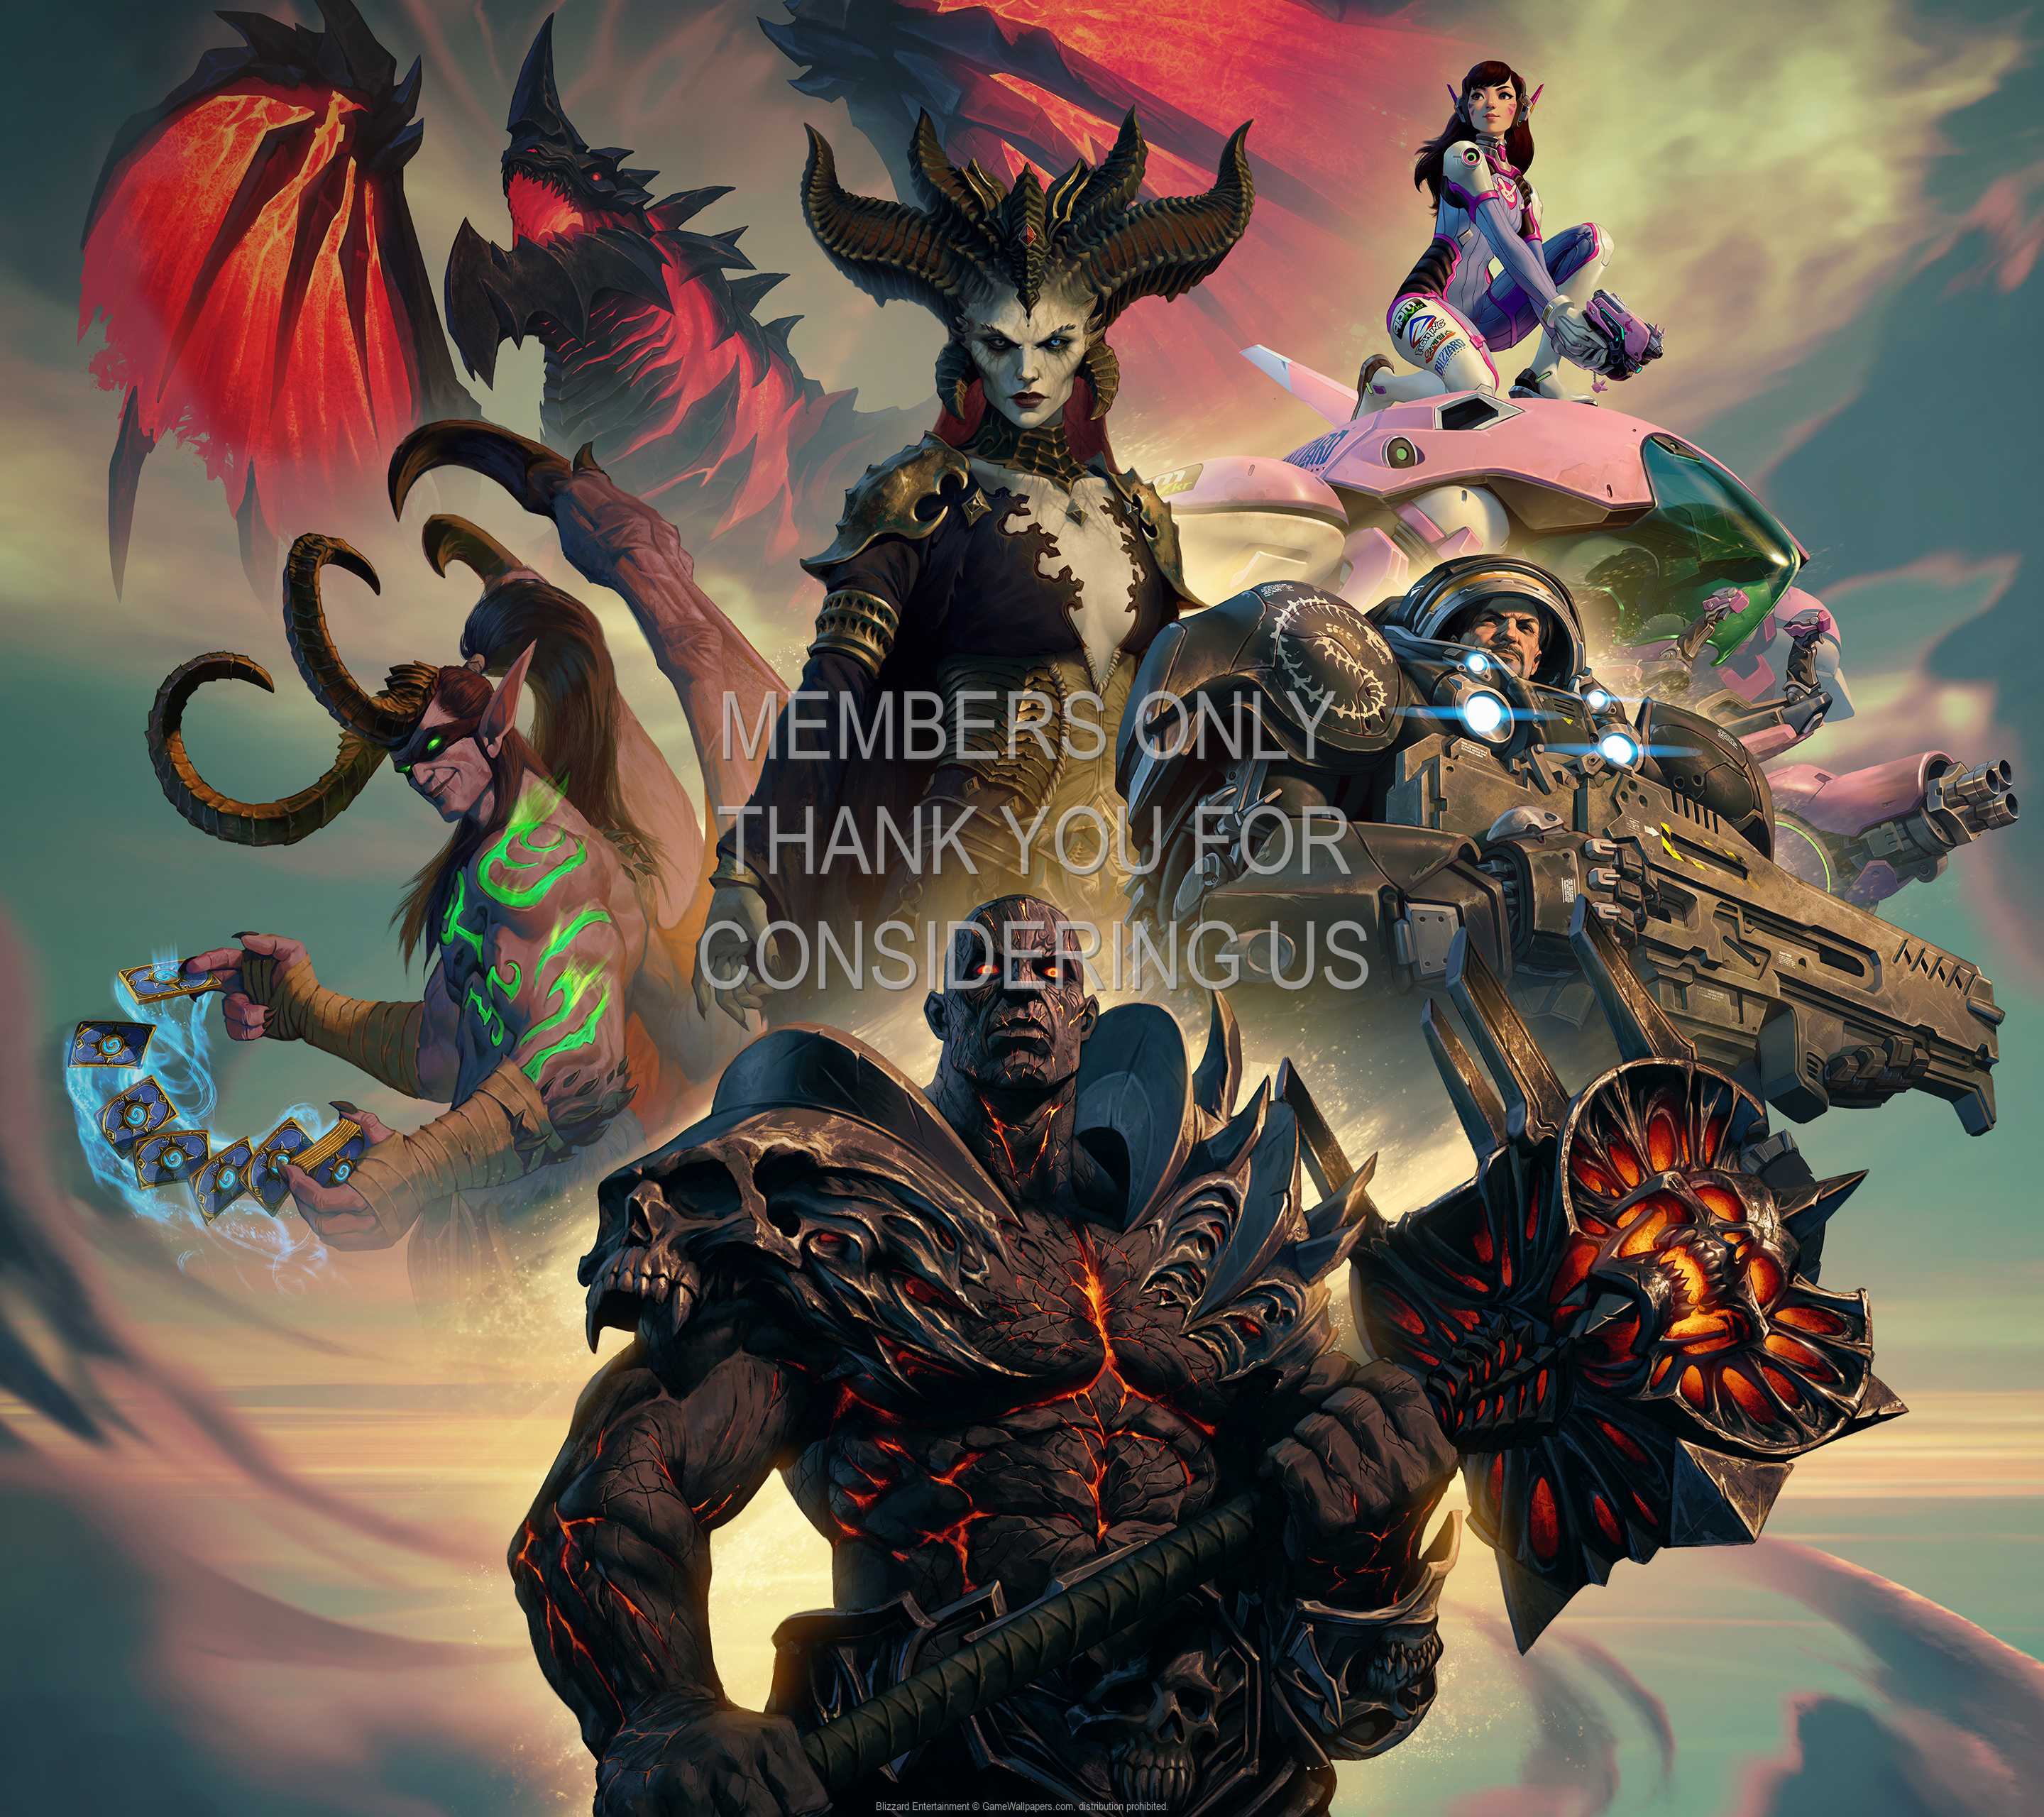 Blizzard Entertainment 1440p Horizontal Mobile wallpaper or background 06